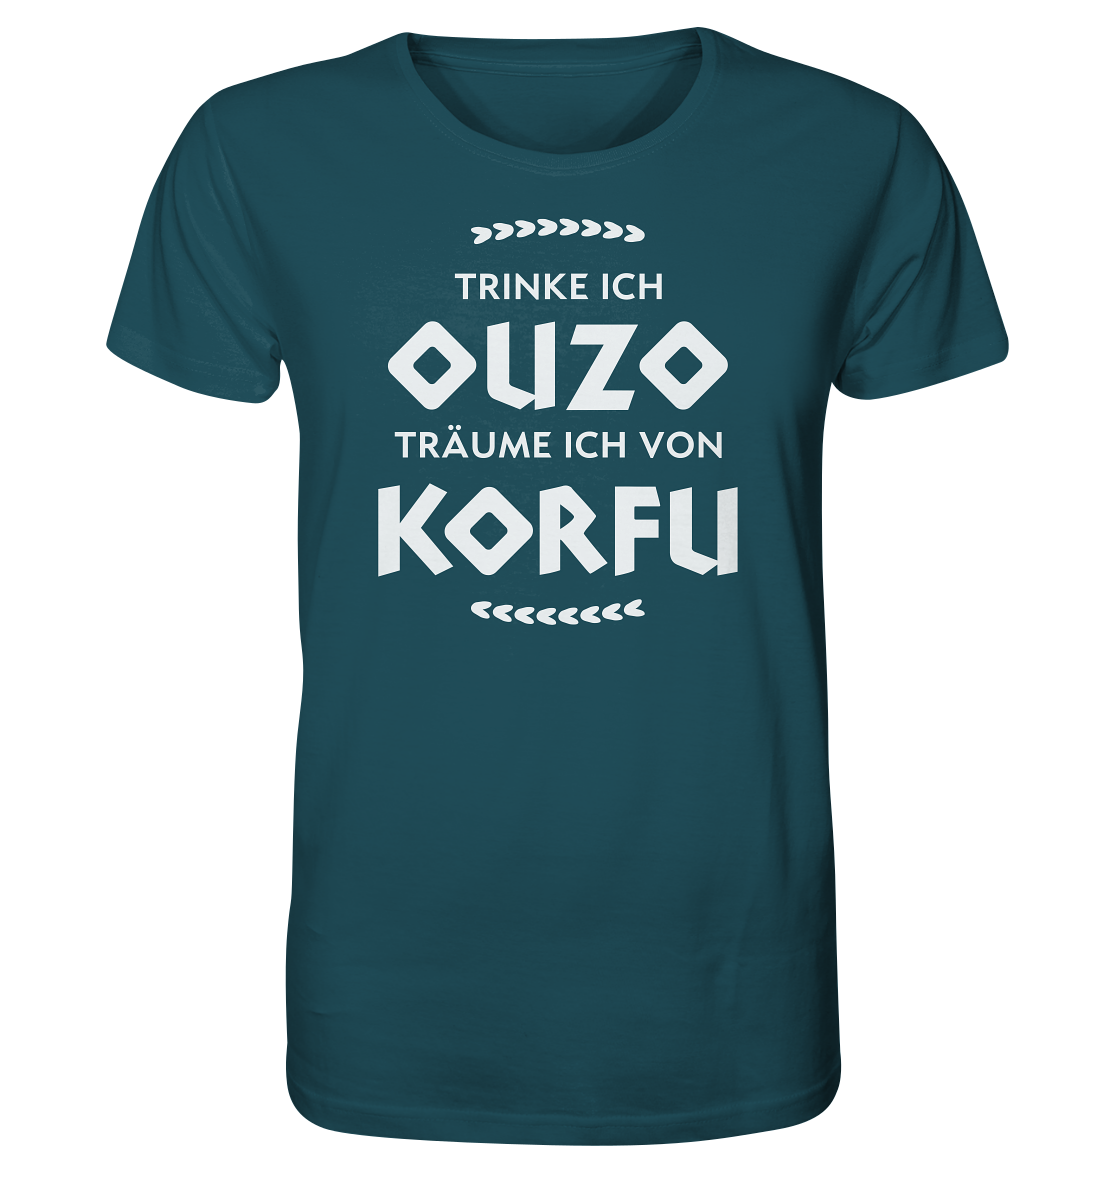 When I drink Ouzo I dream of Corfu - Organic Shirt